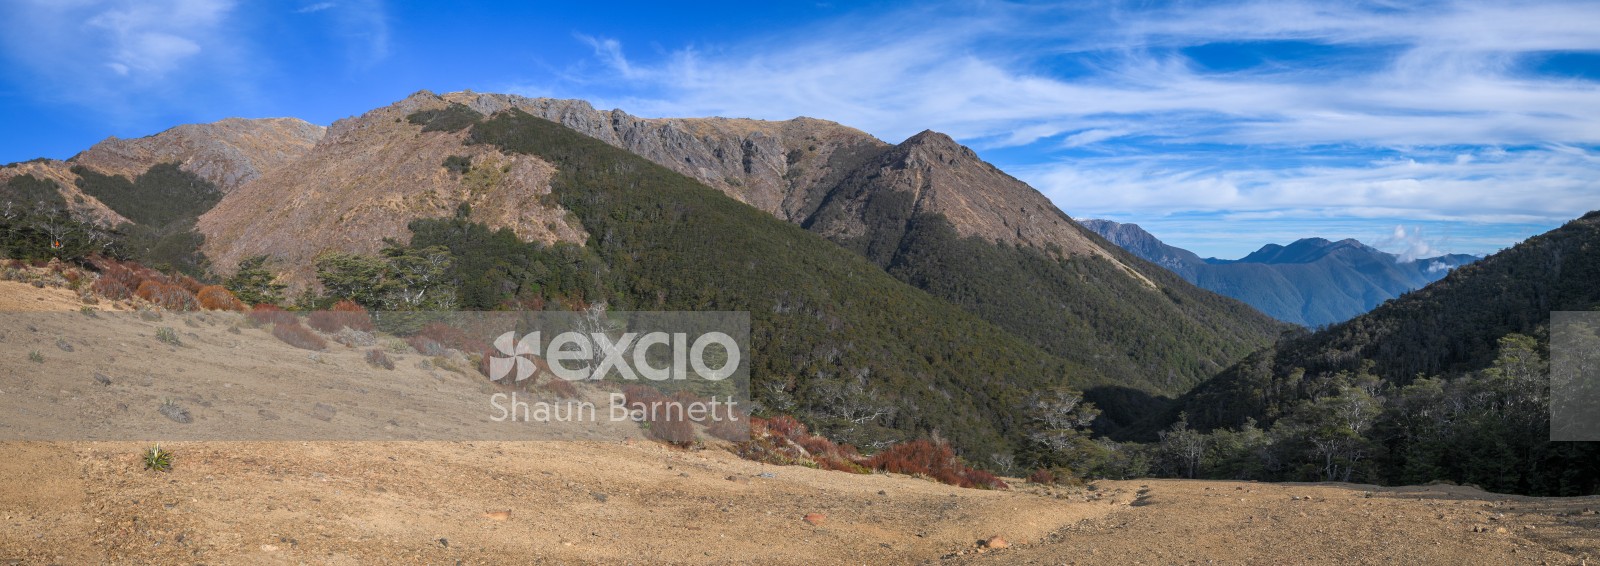 Mt Starveall, Te Araroa Trail